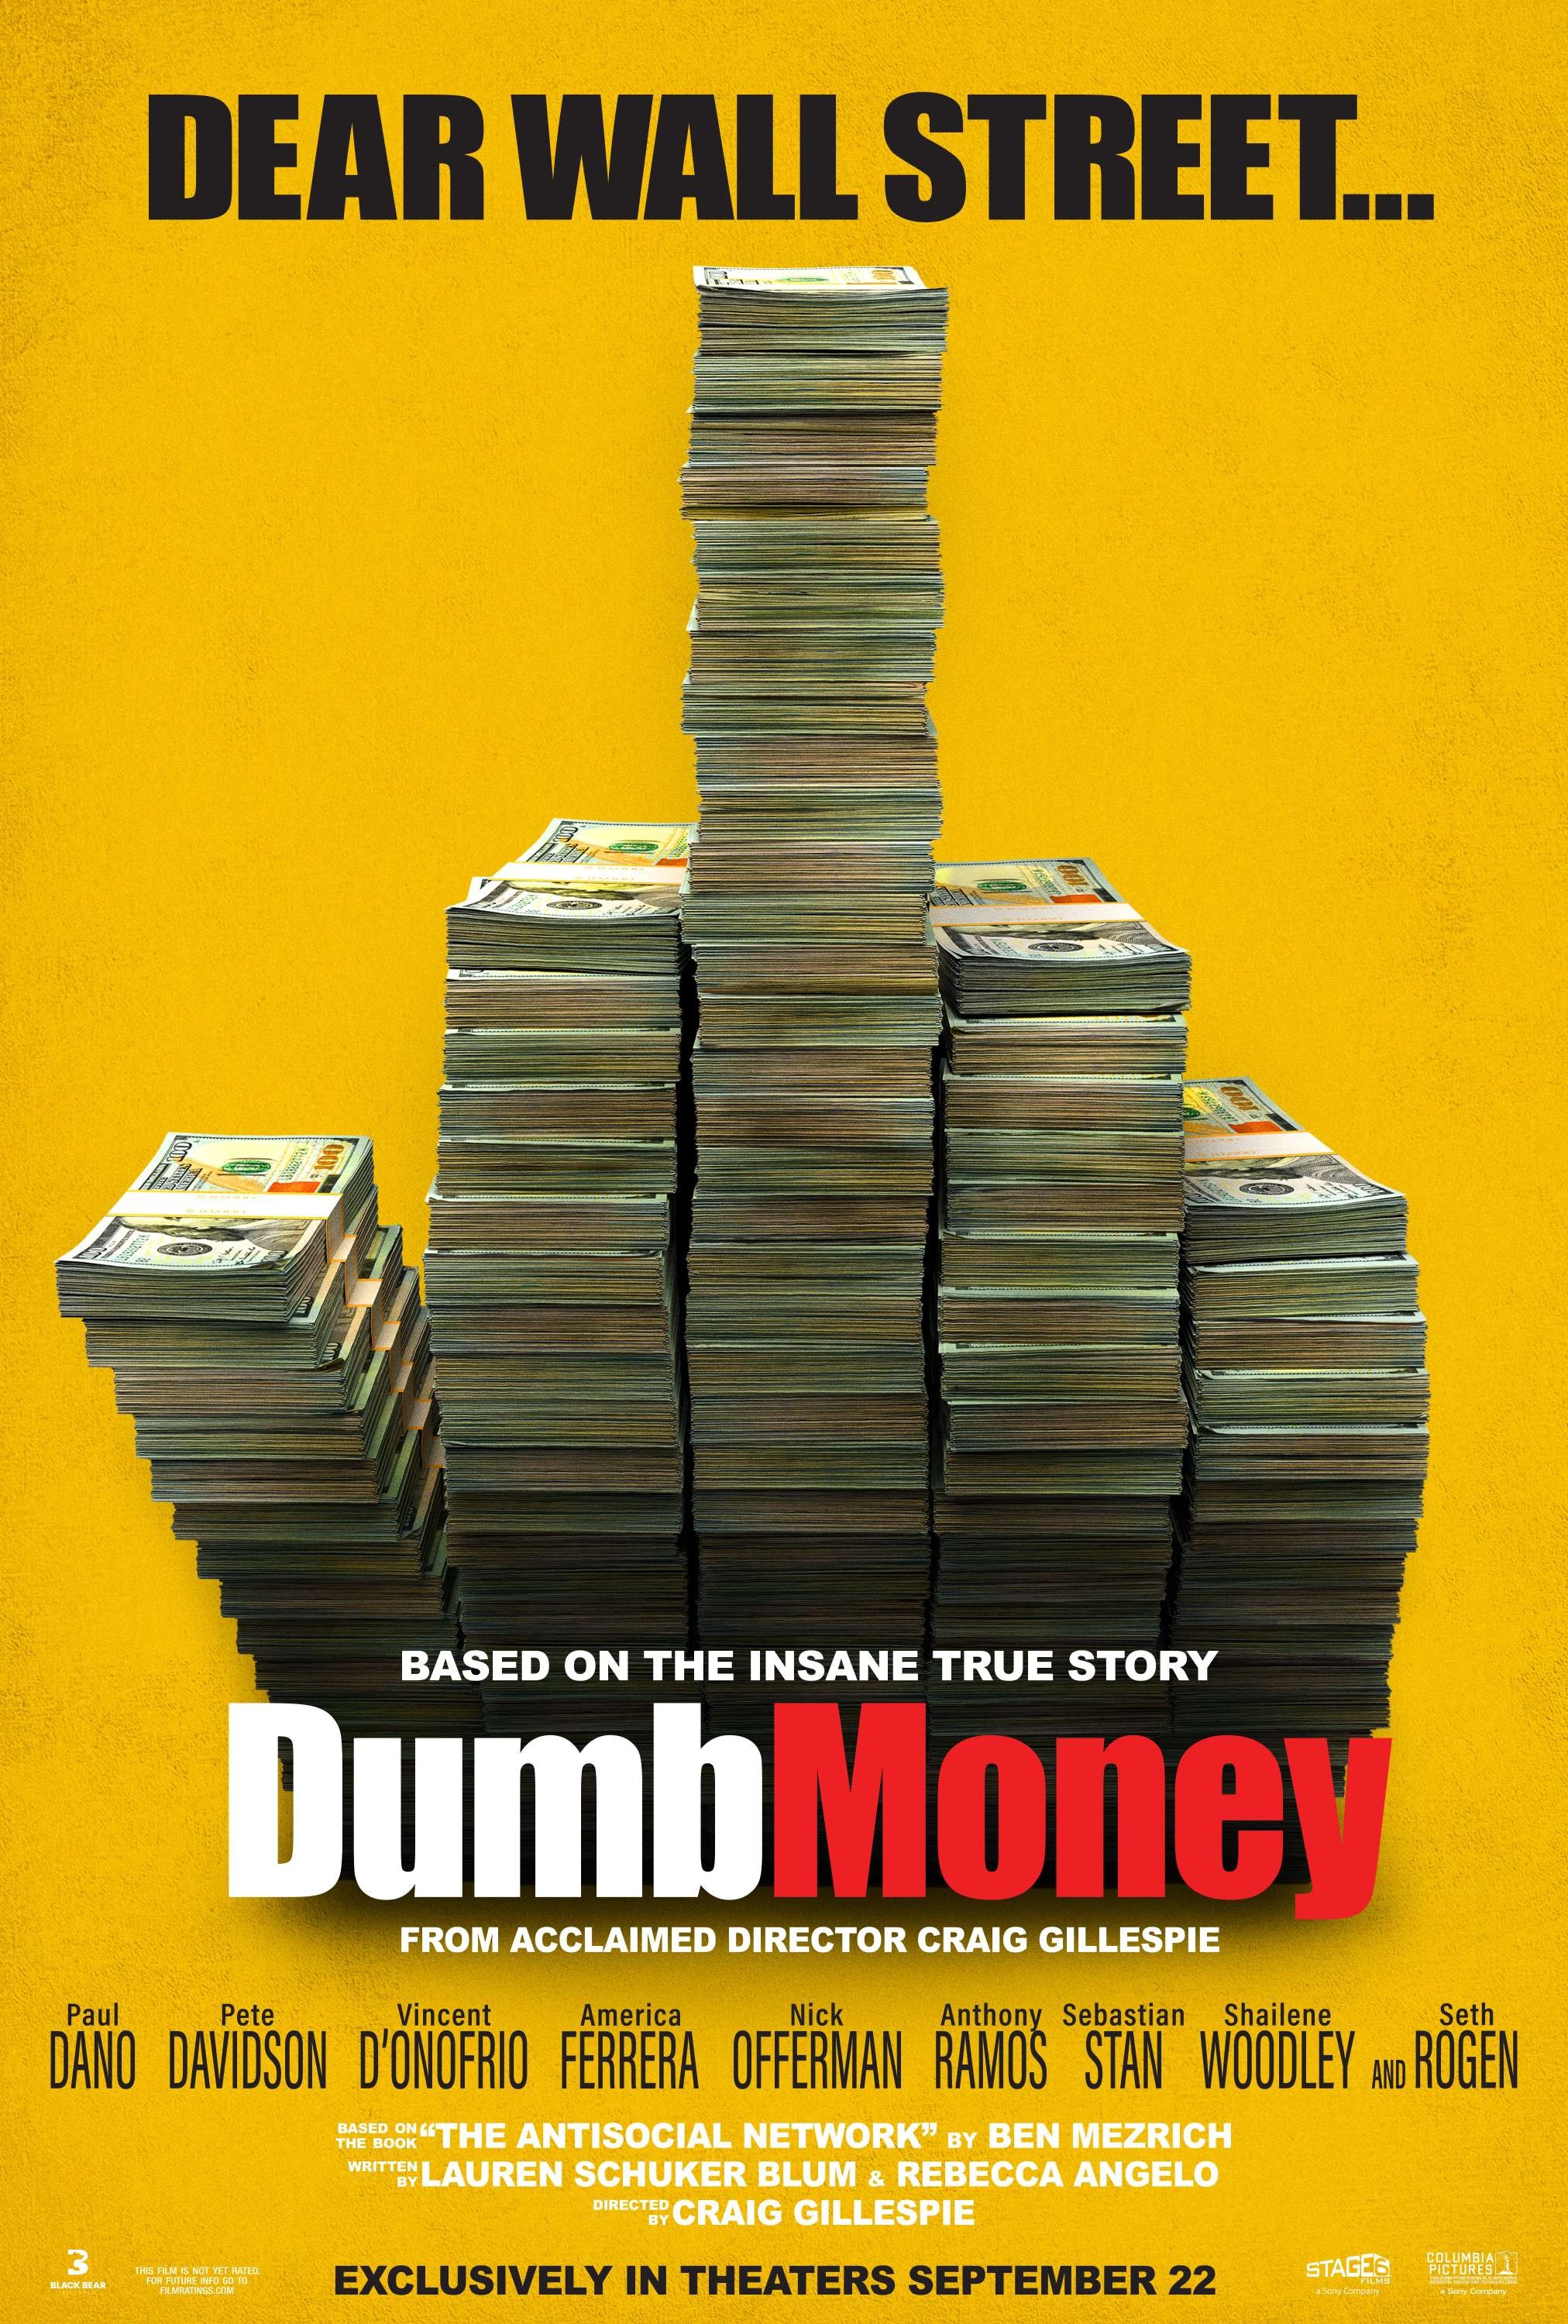 cash movie poster